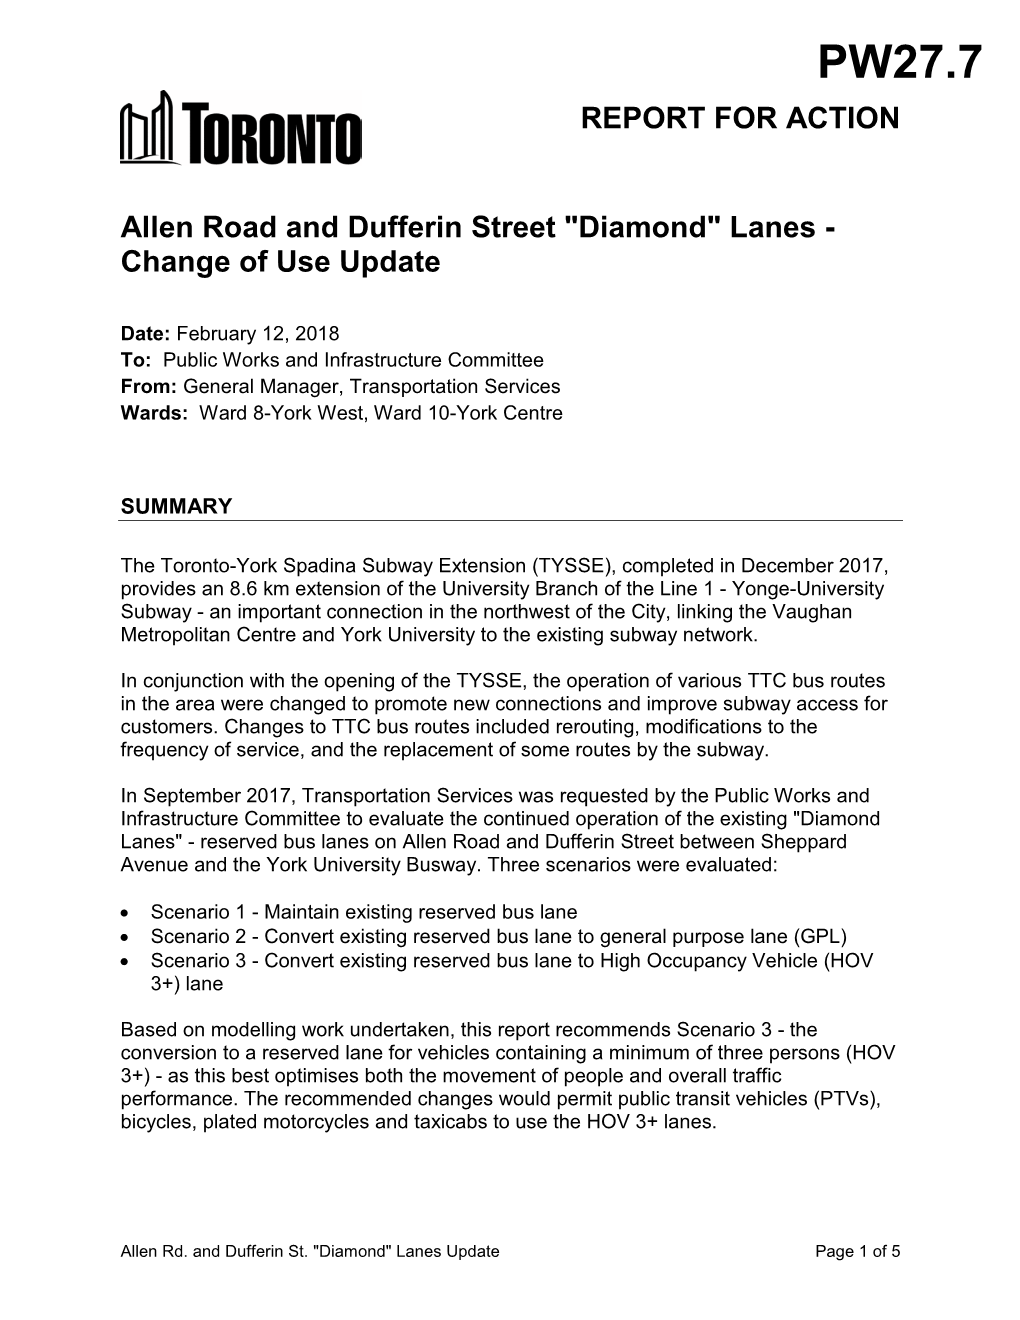 Allen Road and Dufferin Street "Diamond" Lanes - Change of Use Update